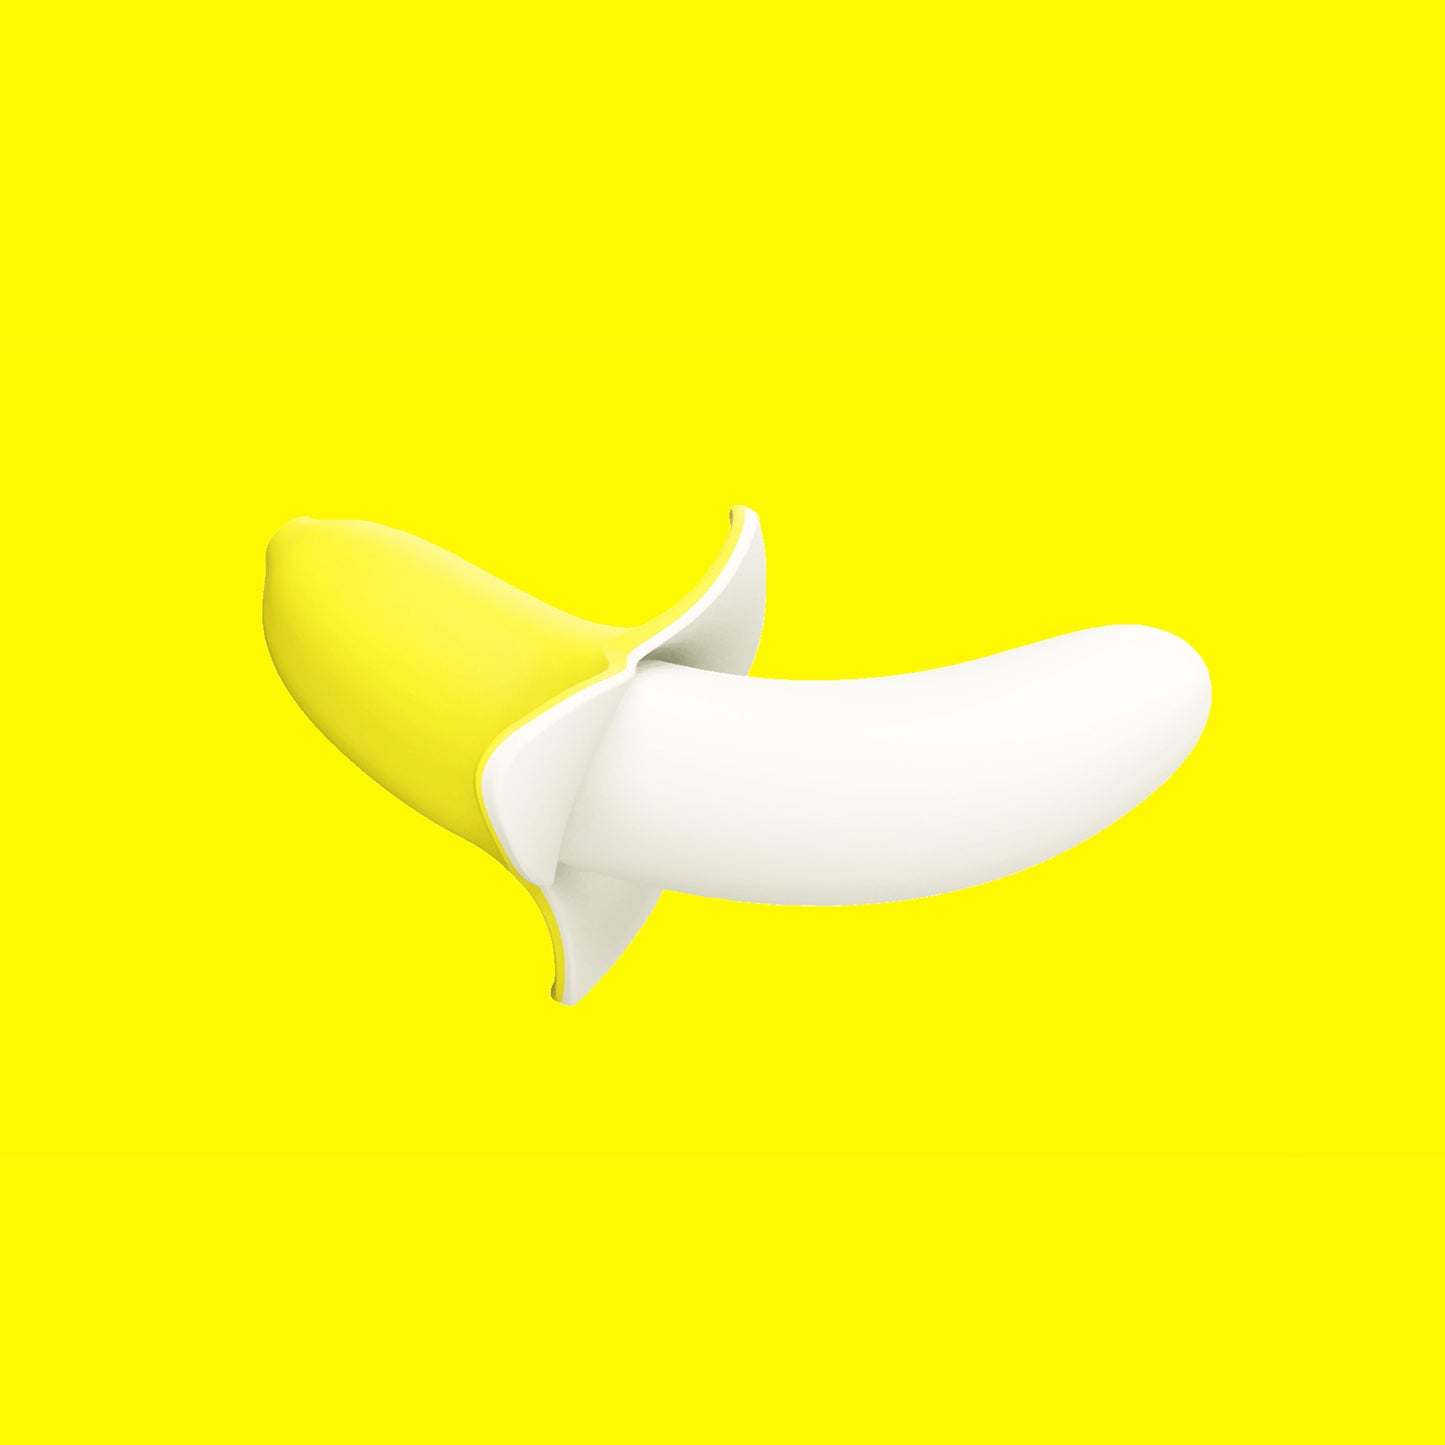 Fruit Series Vibrator -- Banana